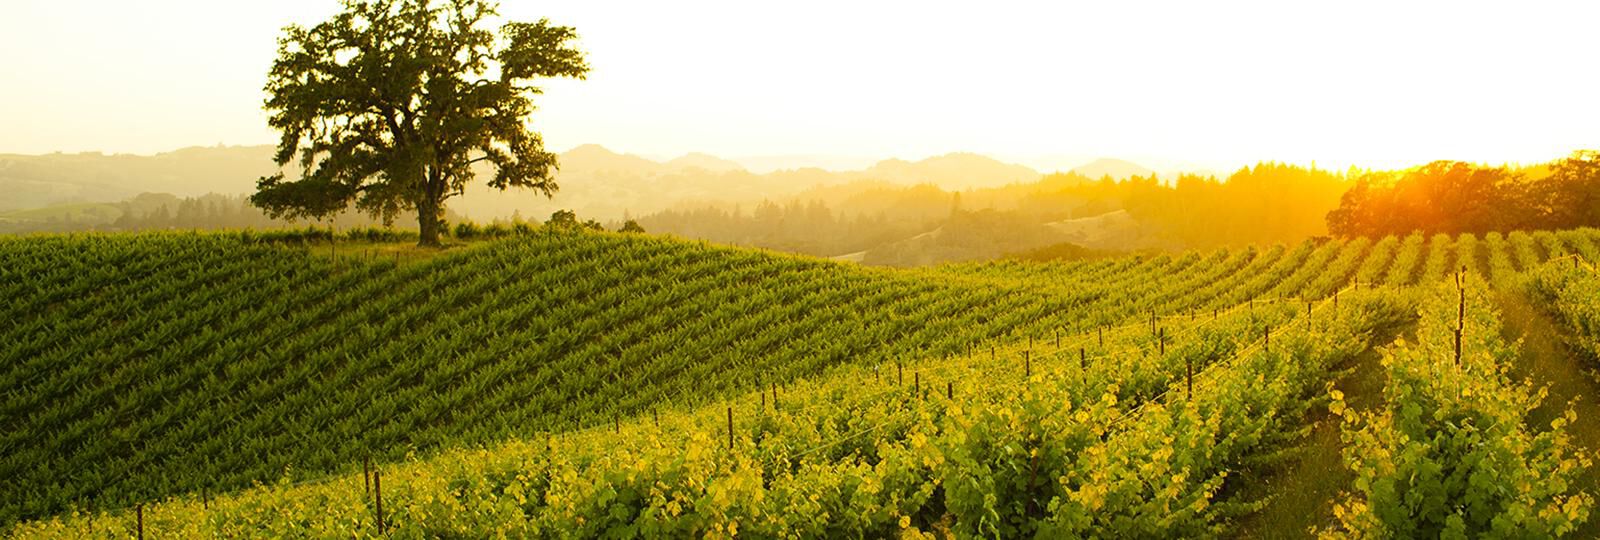 A wine vineyard